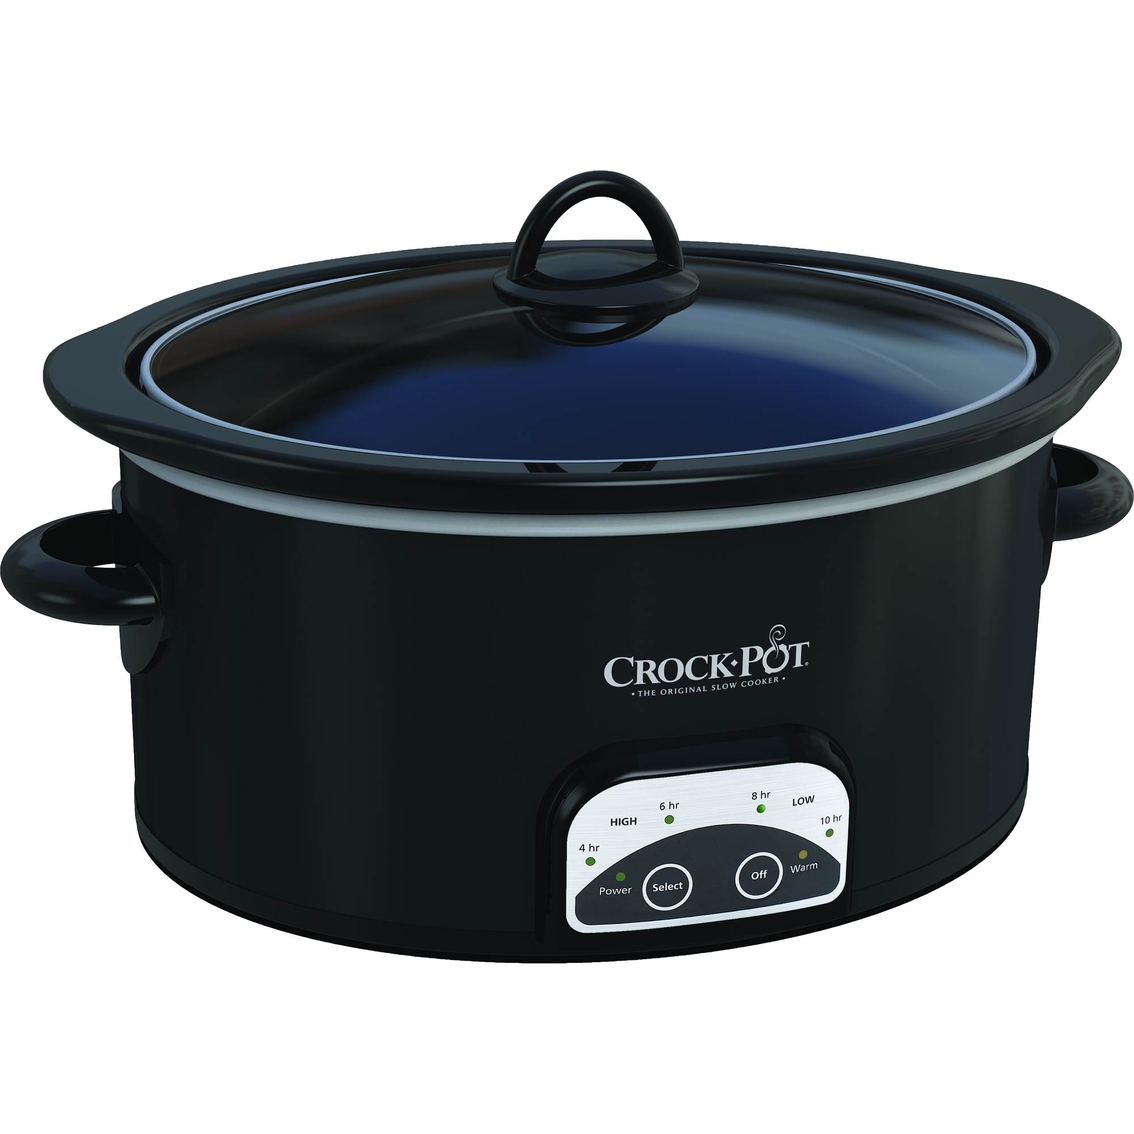 Crock-pot Smart-pot 4-quart Digital Slow Cooker | Cookers & Steamers ...